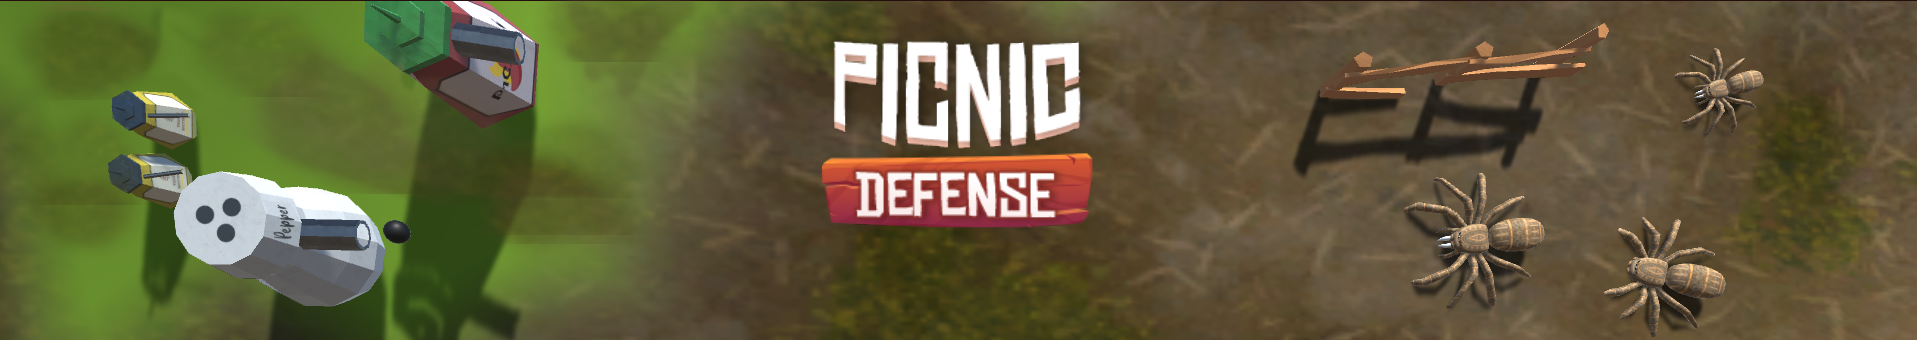 Picnic Defense